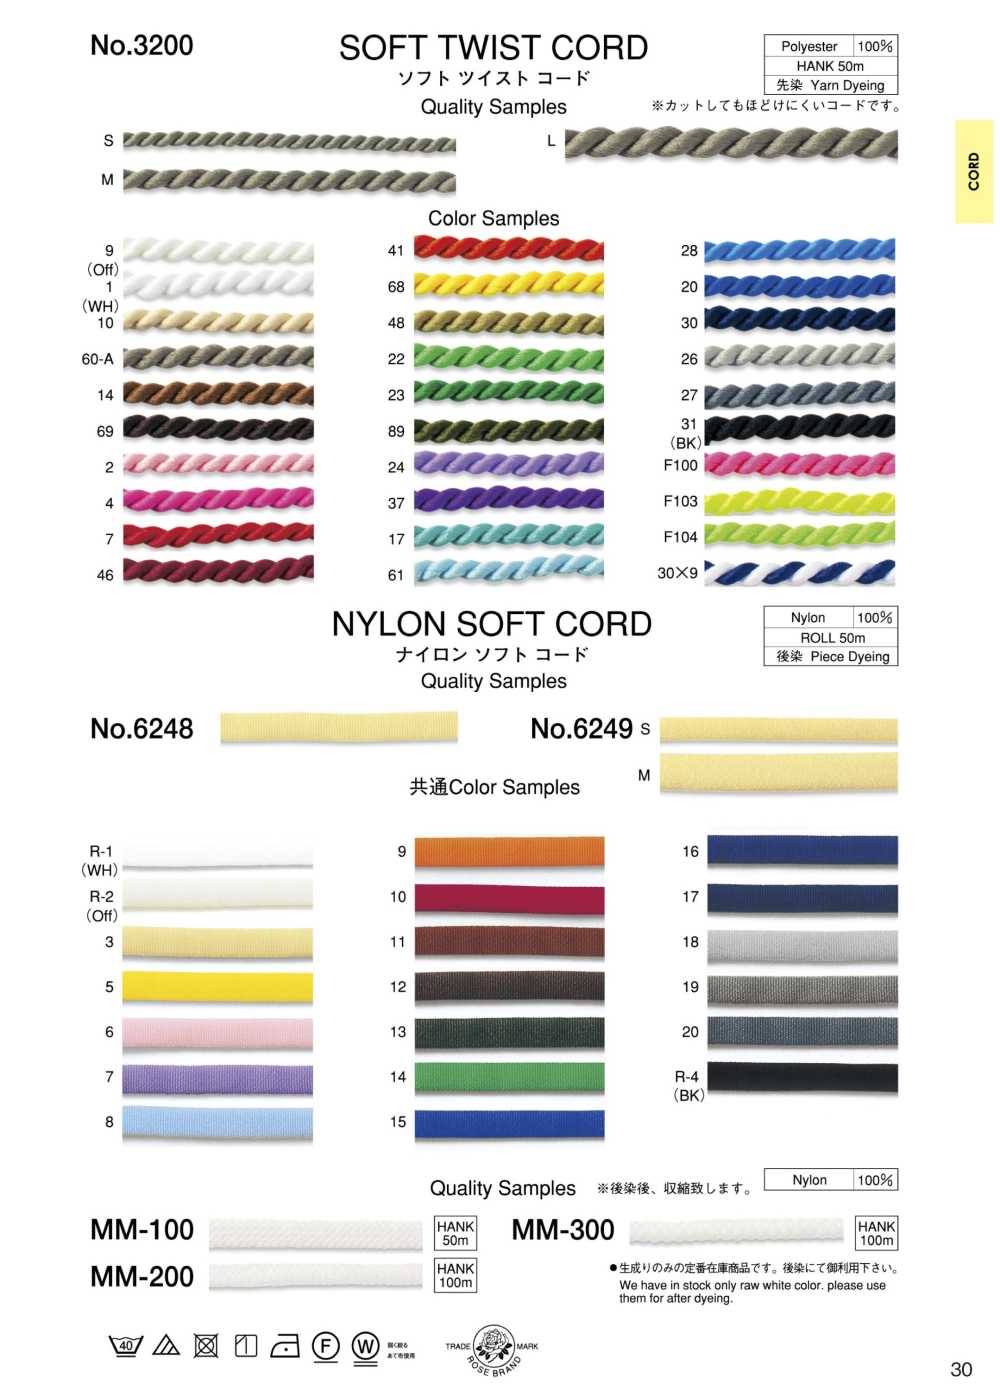 MM-300 Nylon Soft Cord[Ribbon Tape Cord] ROSE BRAND (Marushin)